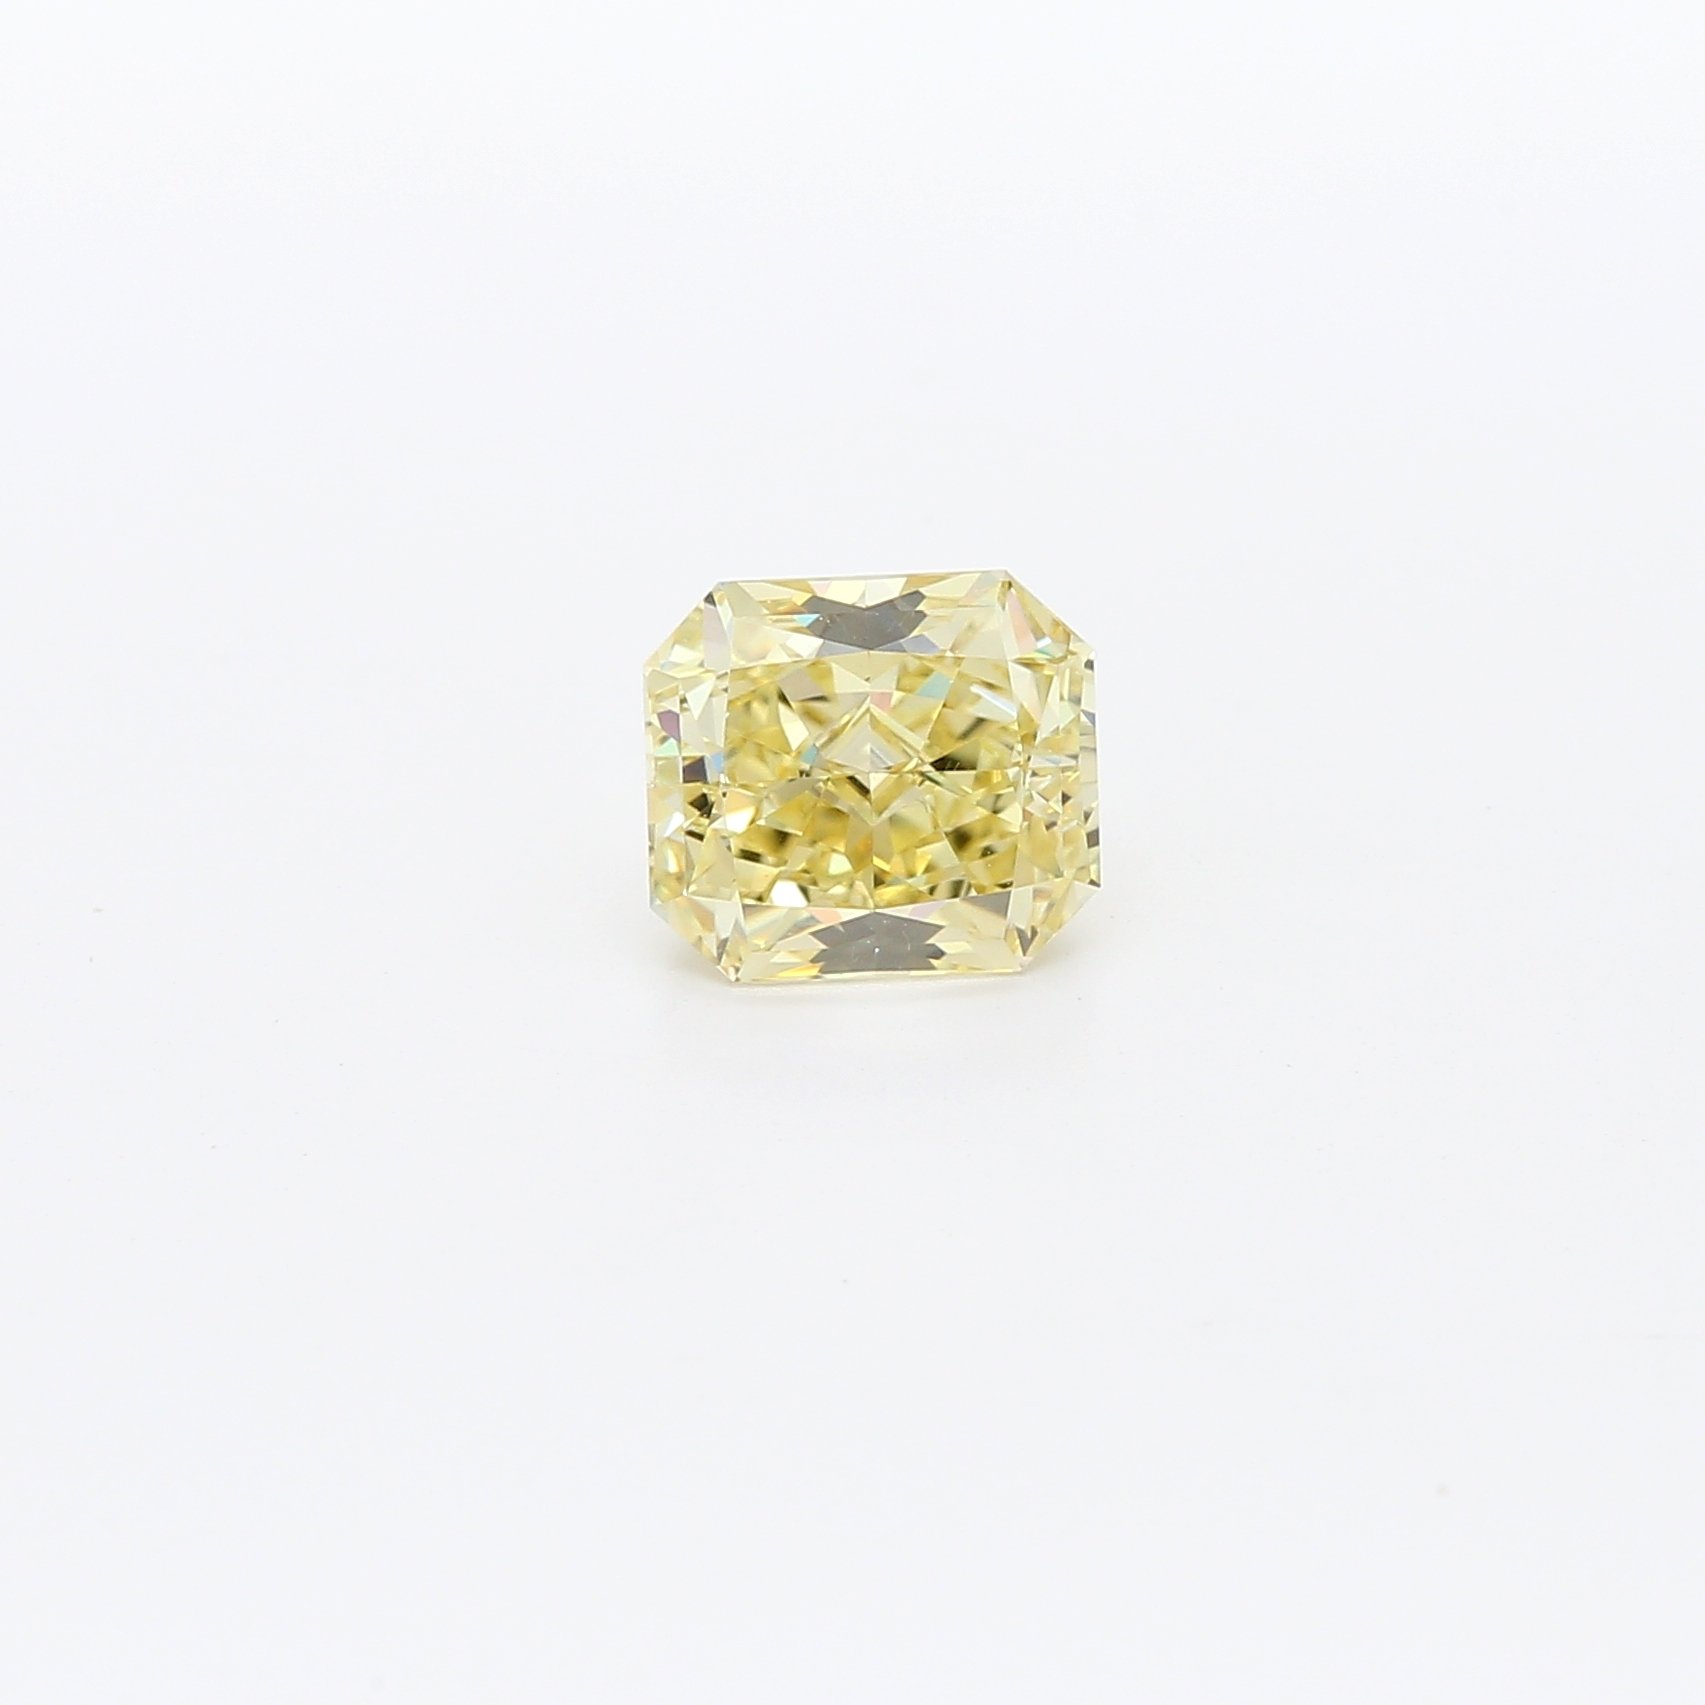 1.55ct Radiant Cut Diamond, VS2-FY -GIA